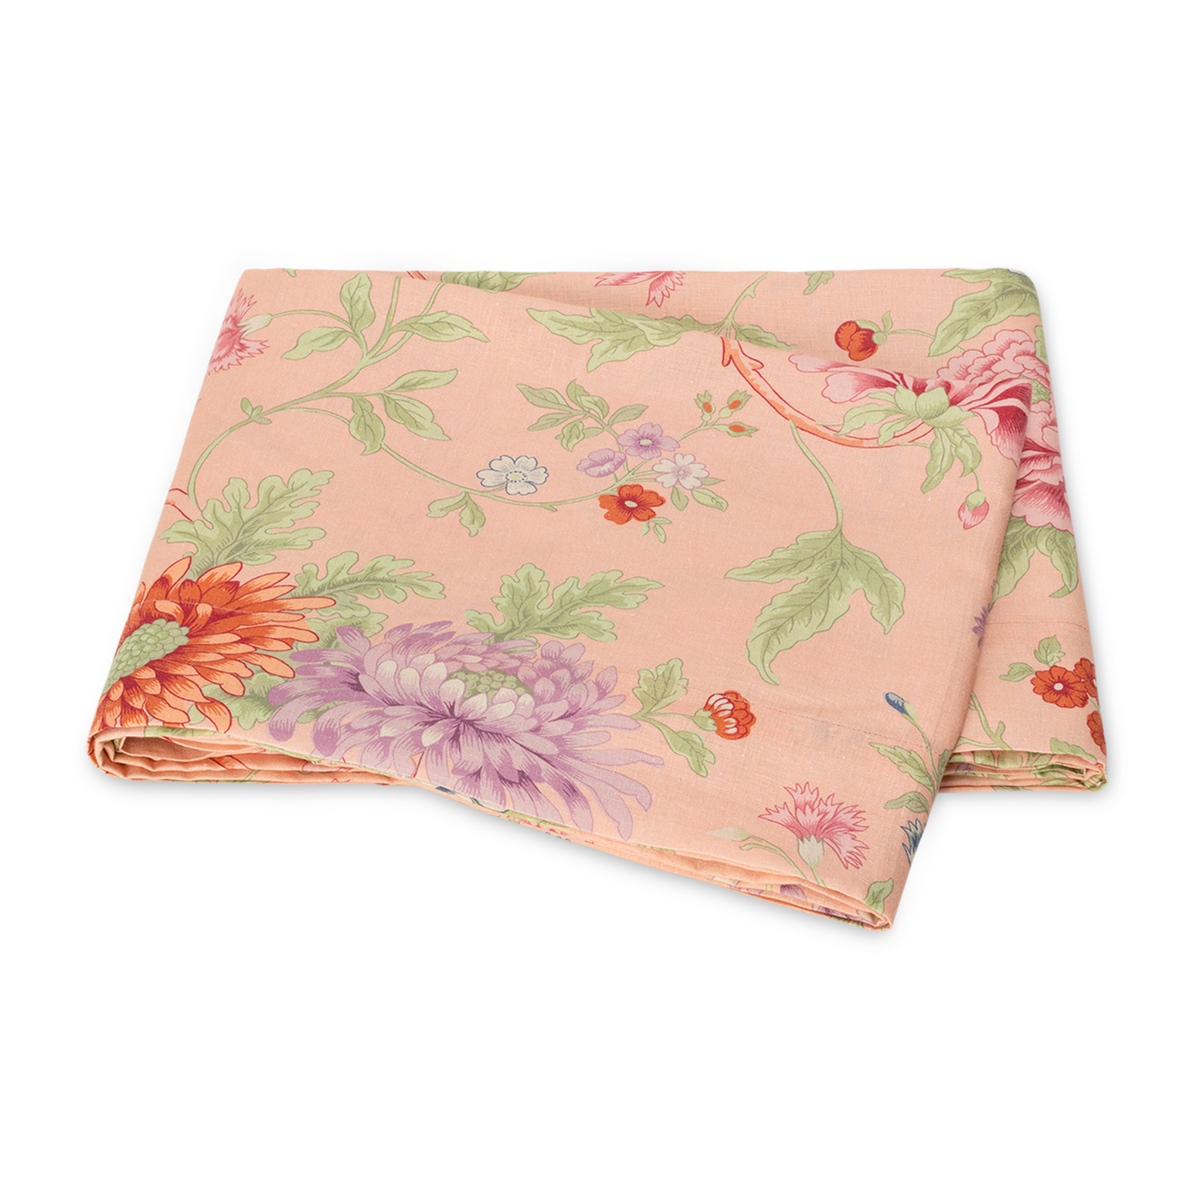 Folded Flat Sheet of Matouk Schumacher Simone Linen Bedding Apricot Color